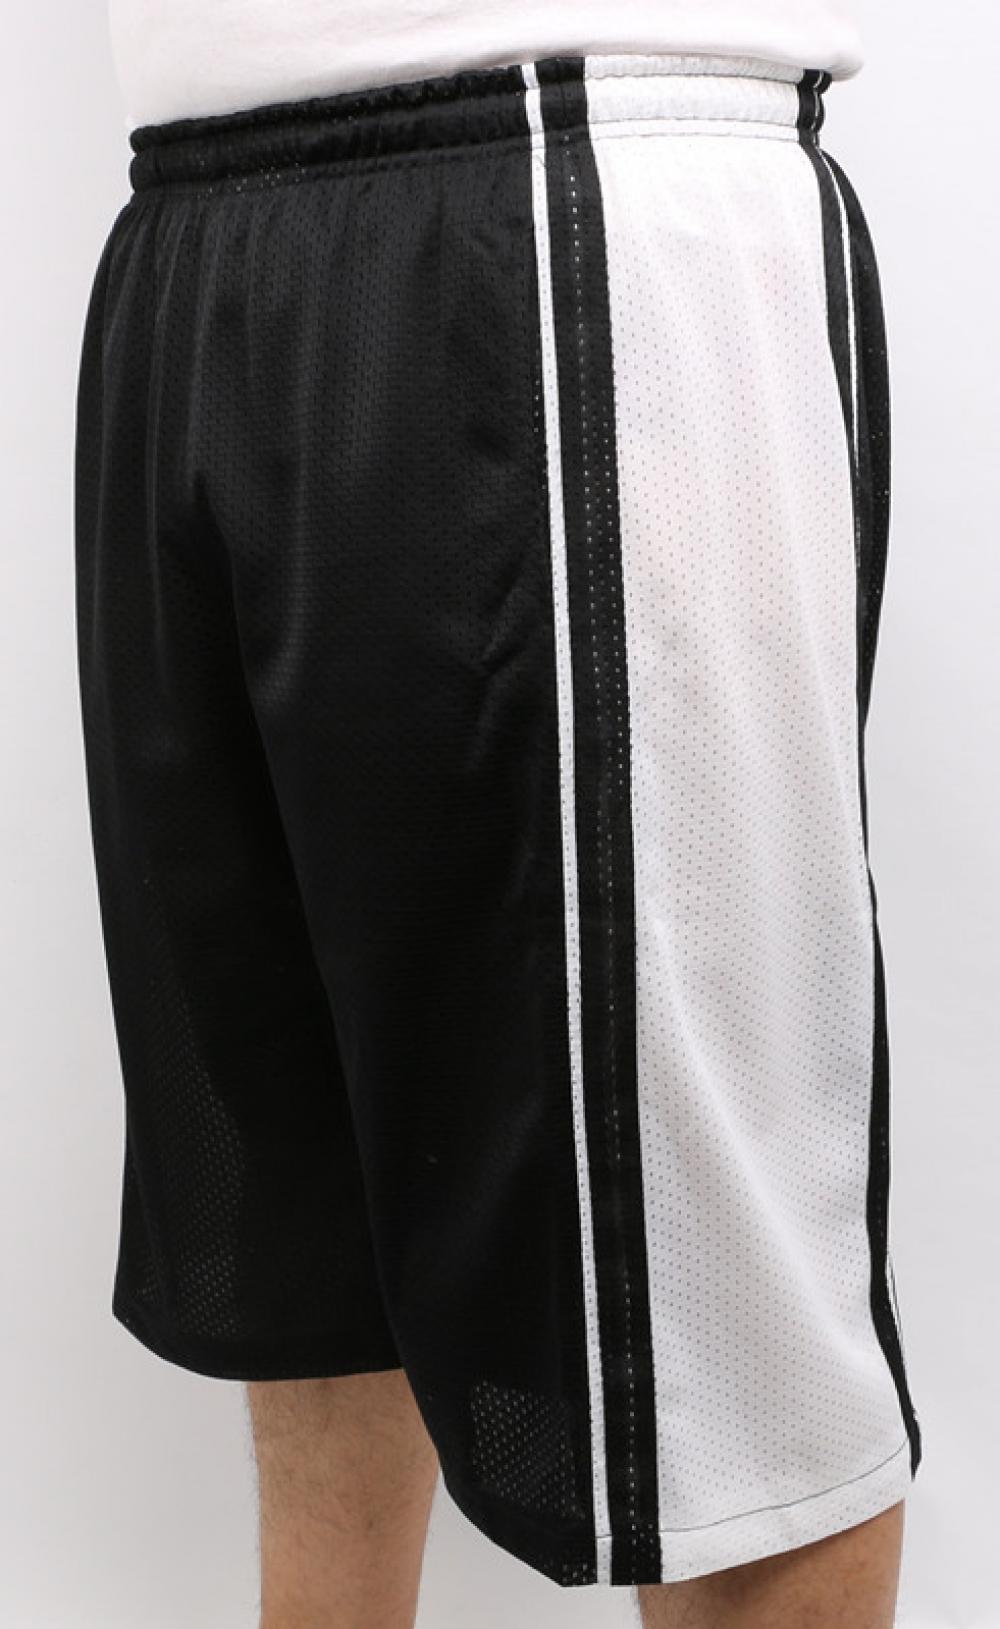 Basketball Shorts Single Stripe NZ$15.00 - CLOTHING STORE